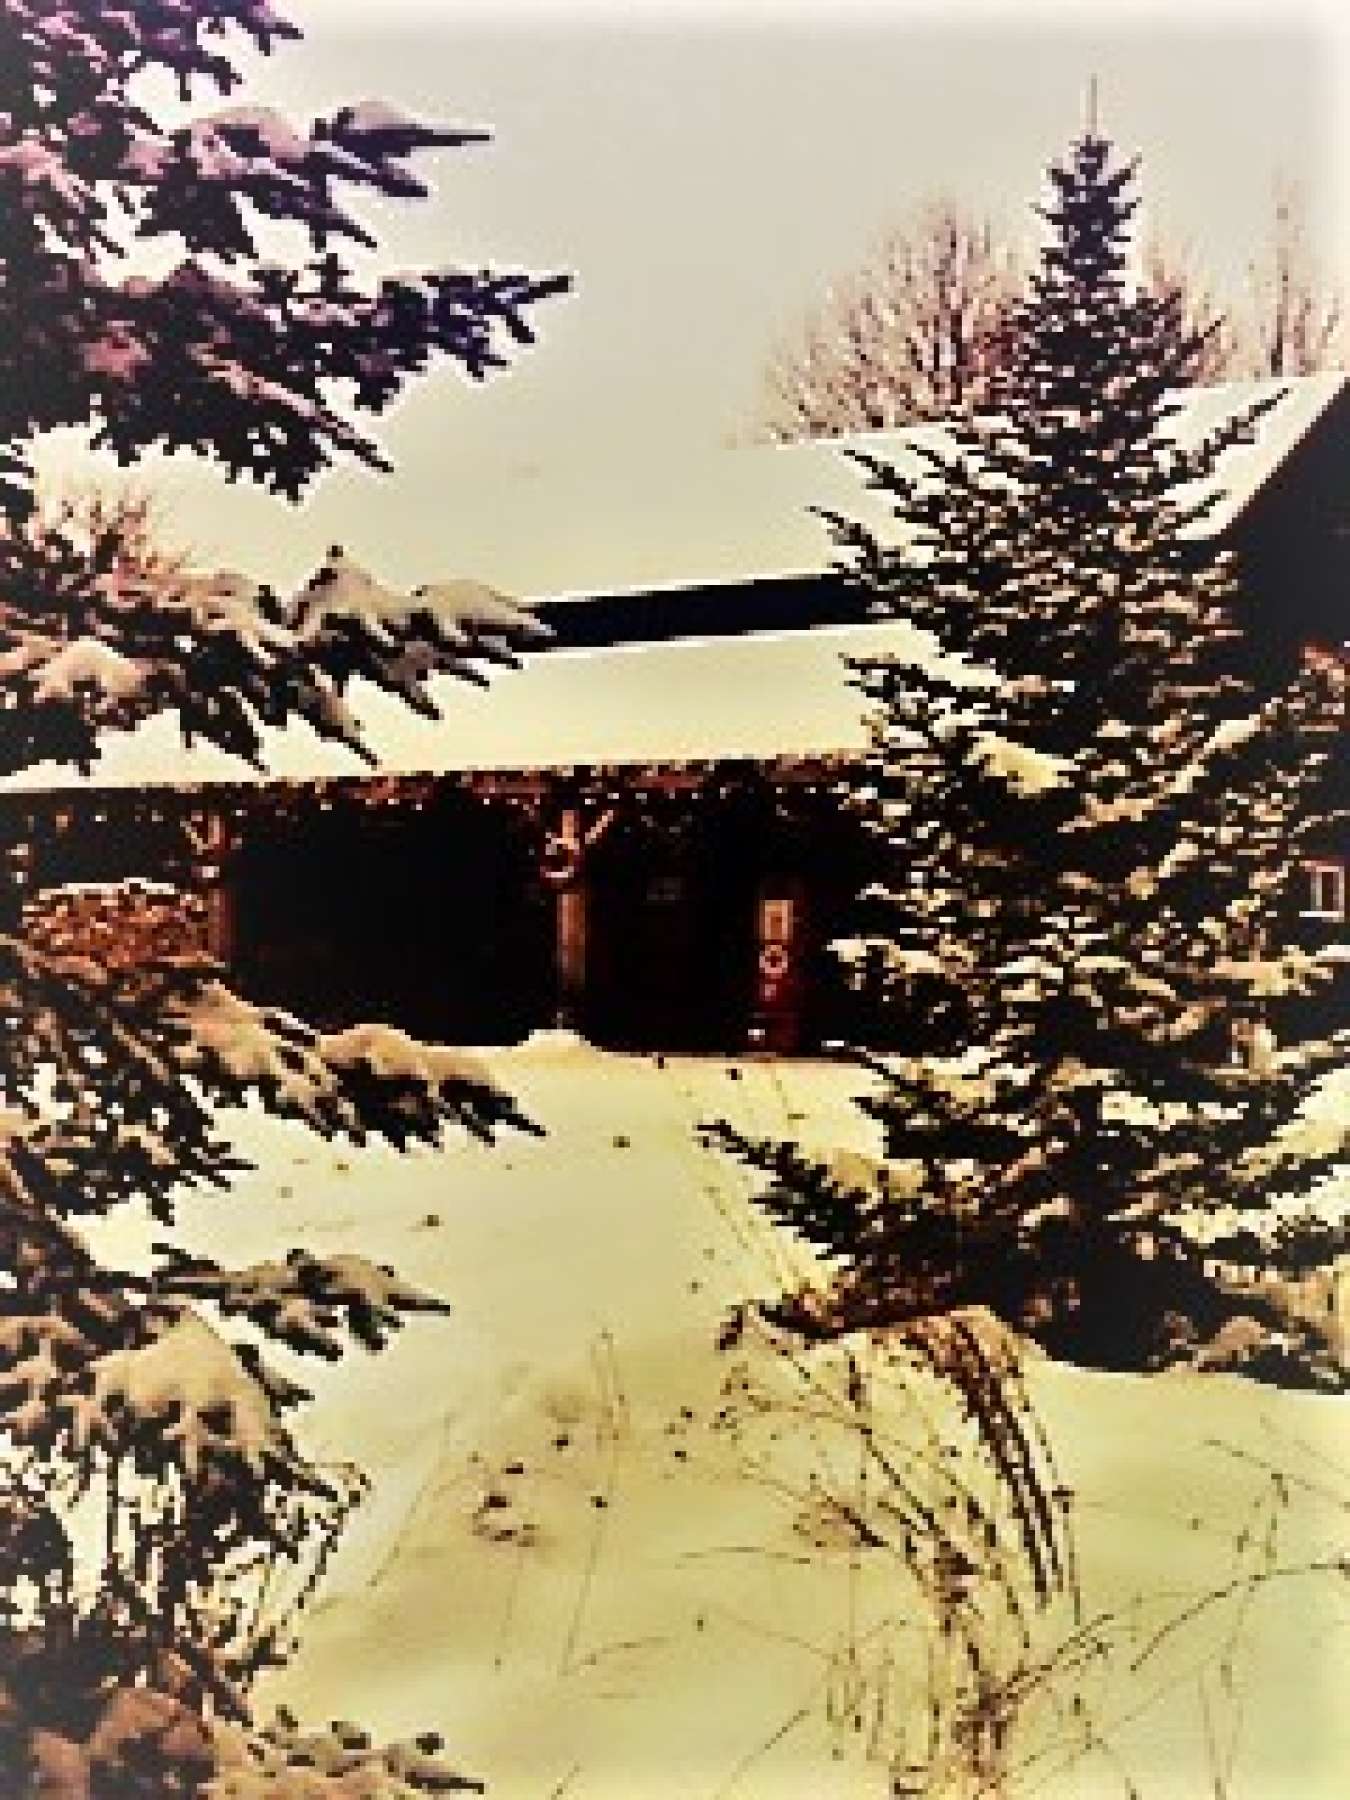 The Barn Studio in Winter